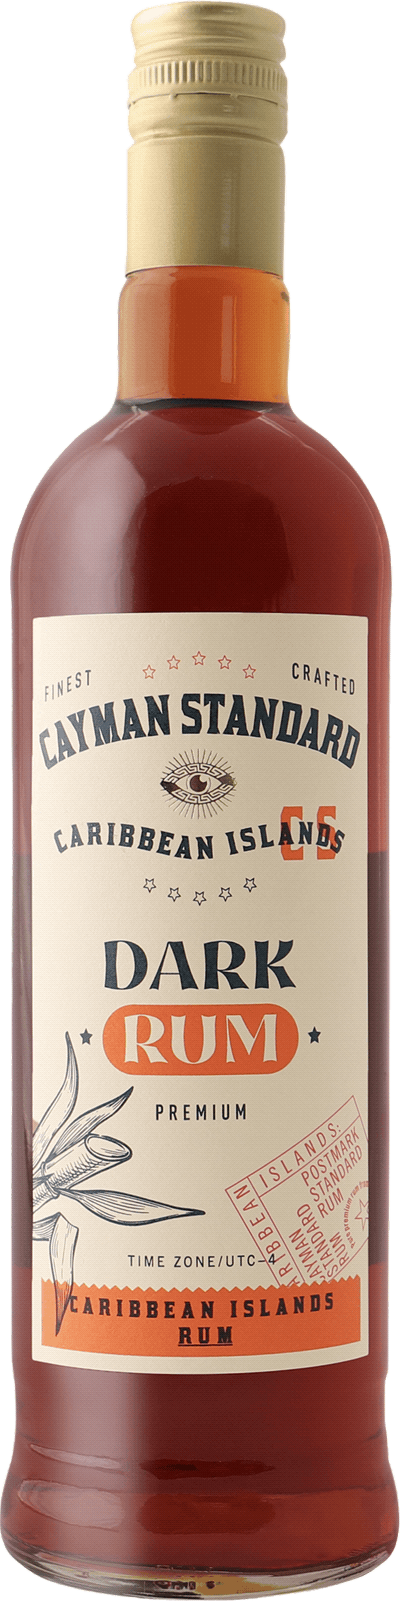 Cayman Standard Dark Rum